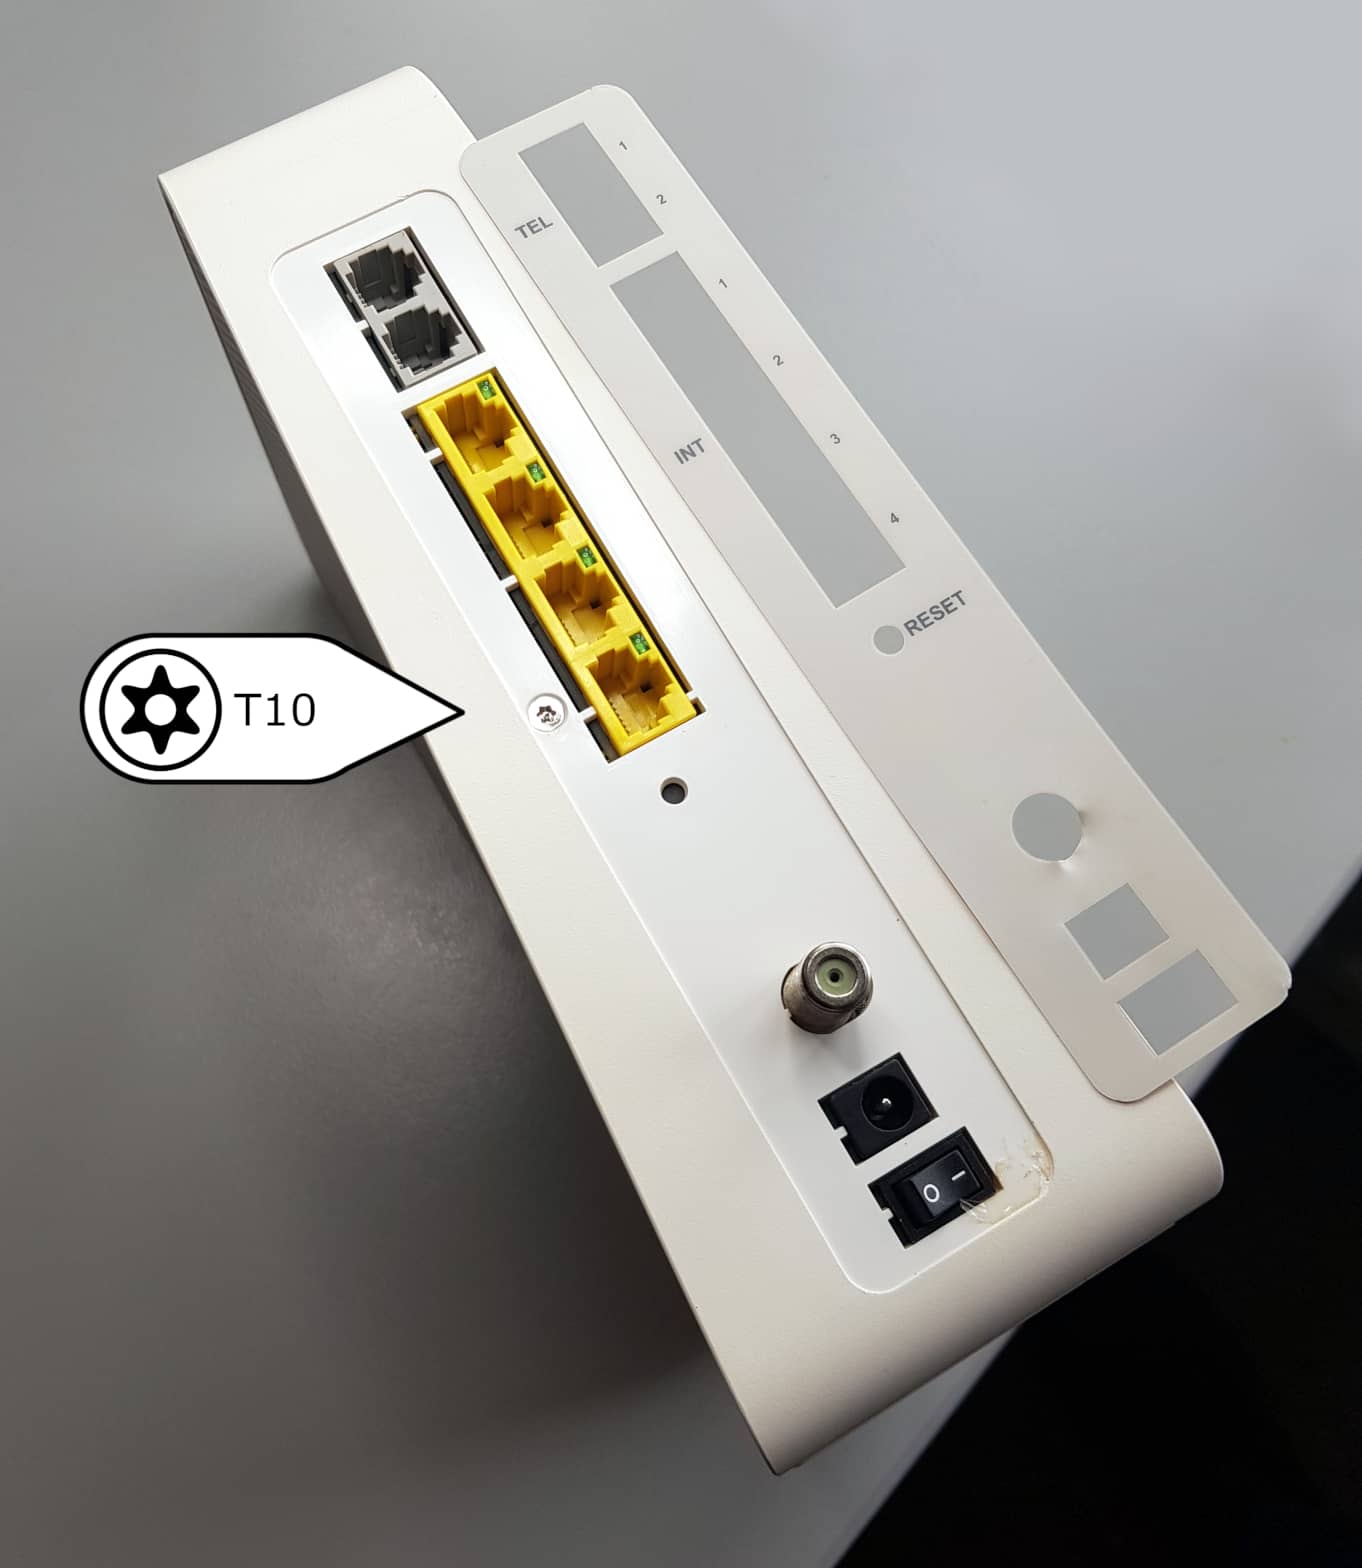 doe niet Van toepassing doneren How to open a Compal CH7465LG-ZG Ziggo Connect Box